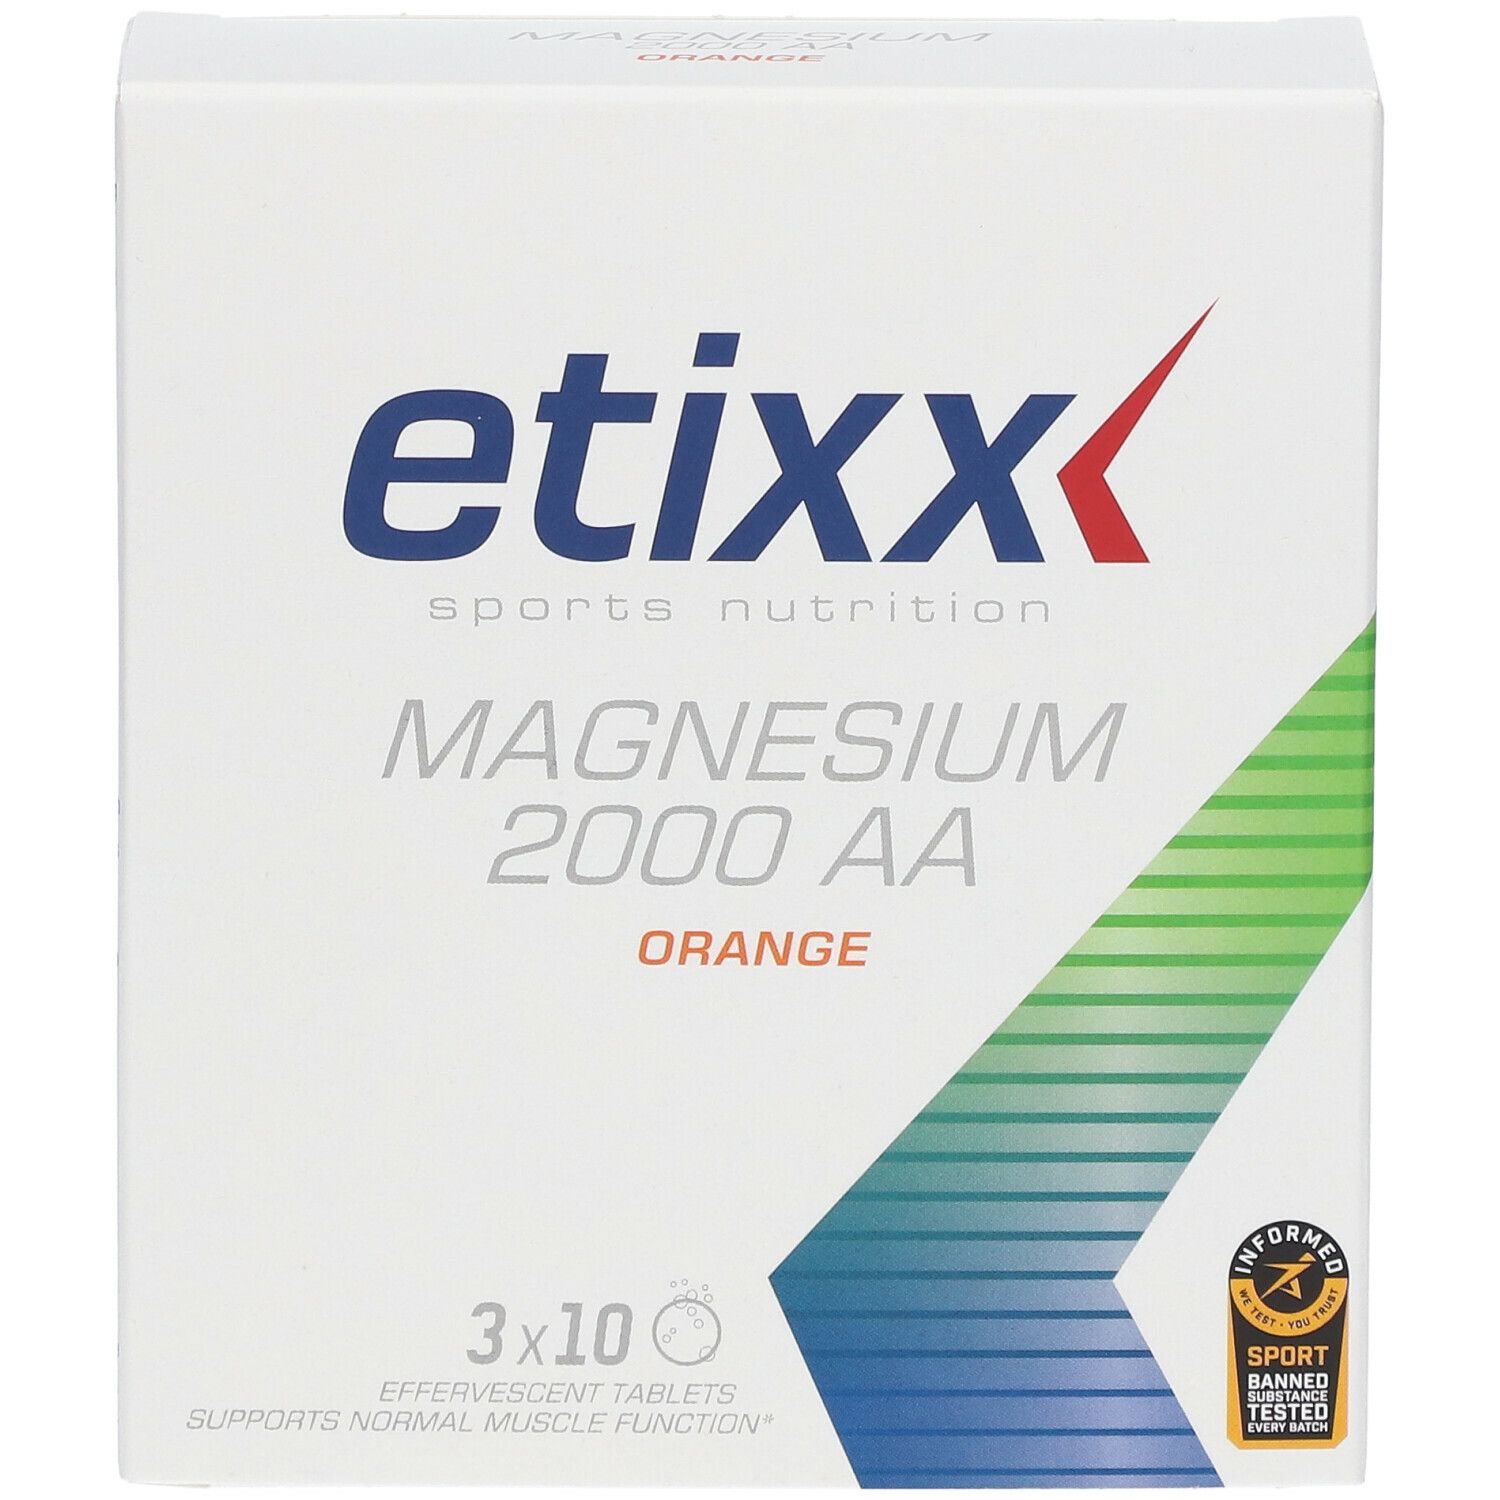 etixx Magnesium 2000 AA